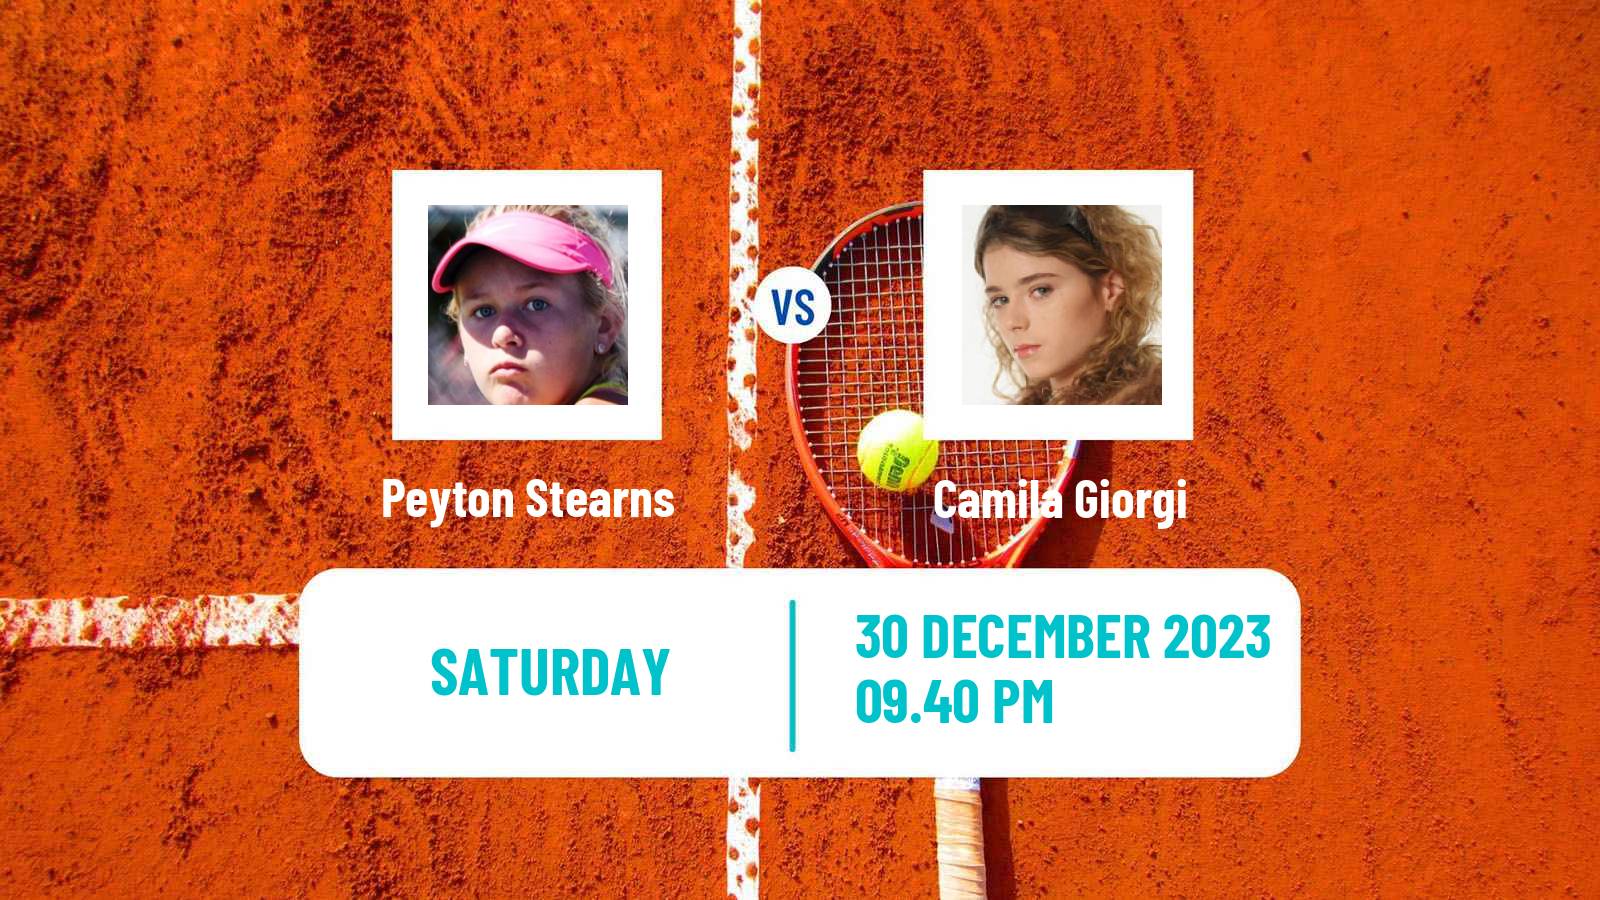 Tennis WTA Brisbane Peyton Stearns - Camila Giorgi